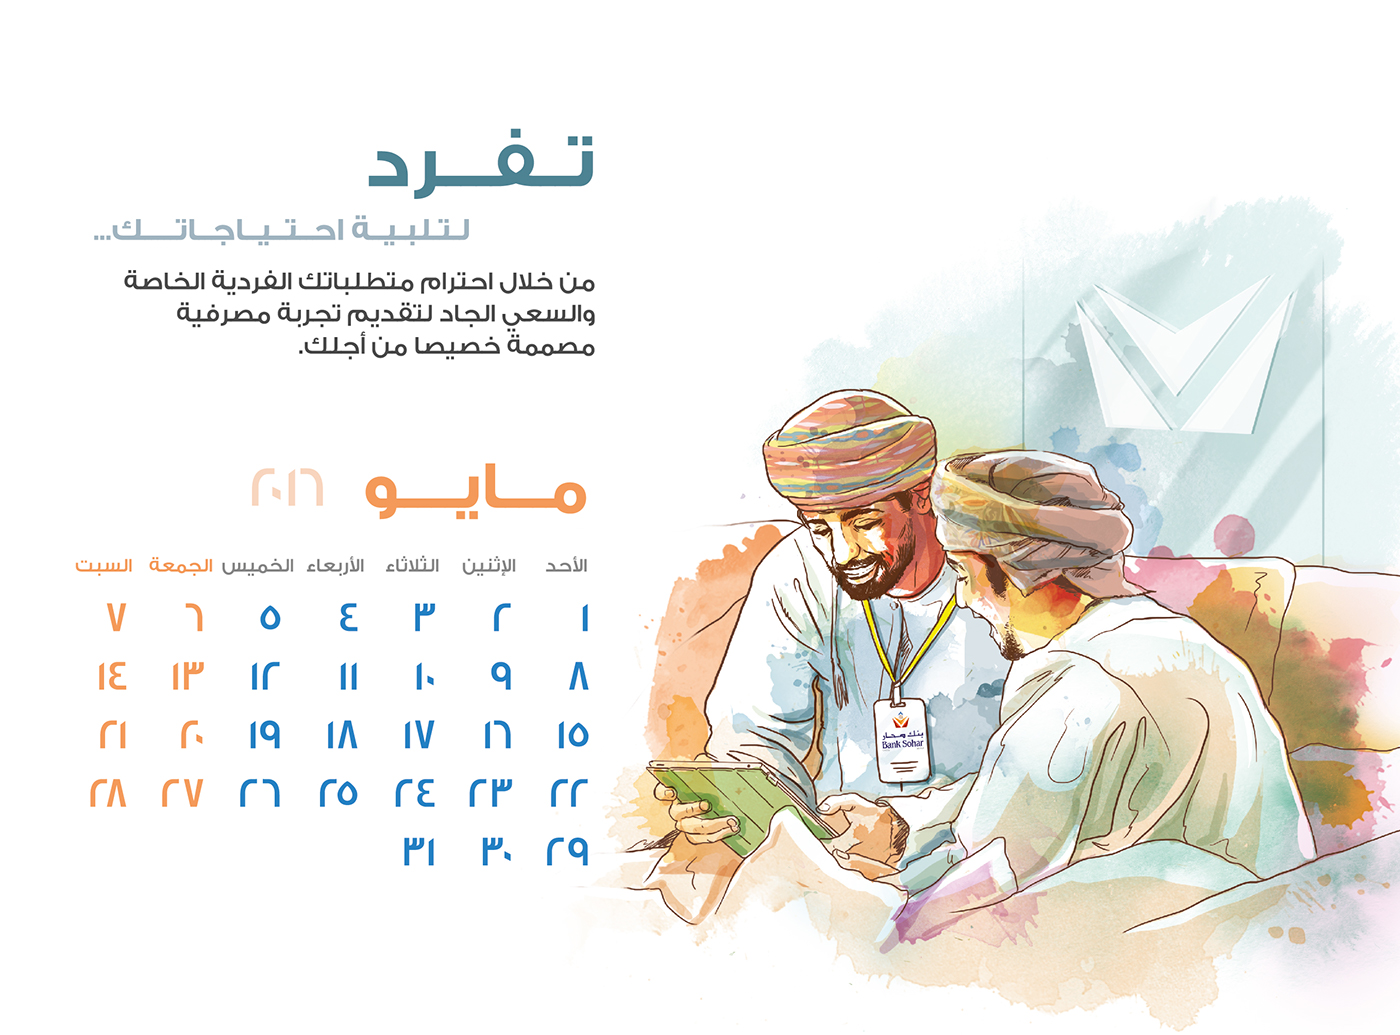 Bank Sohar duaa Abzeed calendar 2016 water color Oman ILLUSTRATION  doart